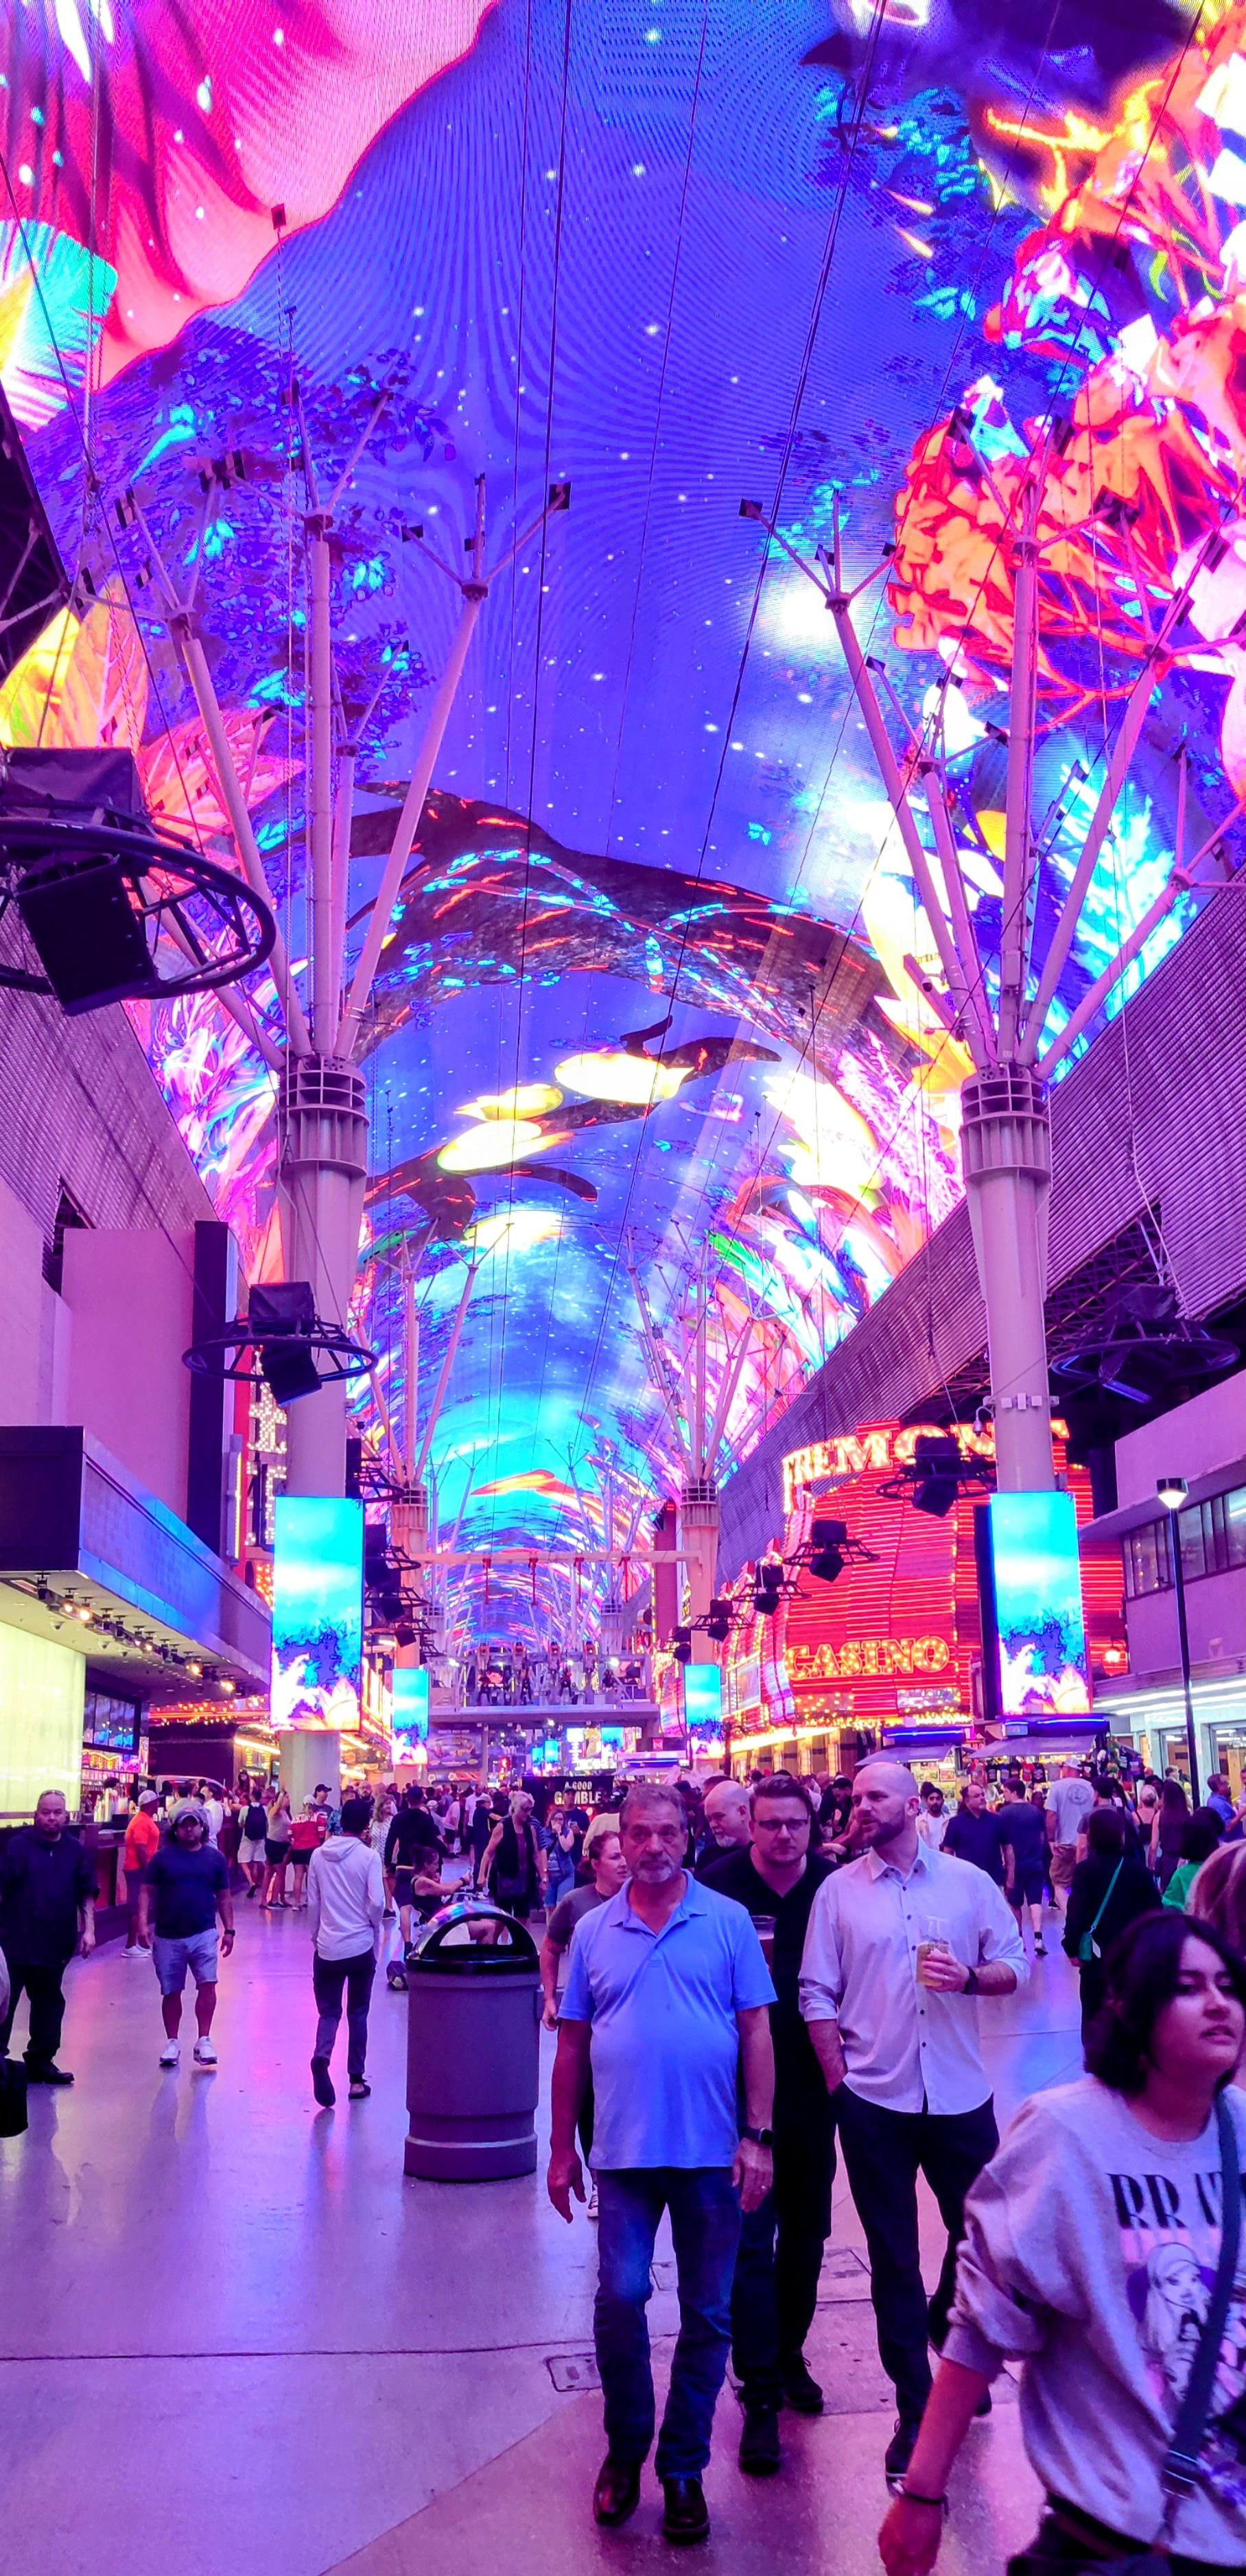 People walking through a colorful neon-lit shopping center. - Las Vegas